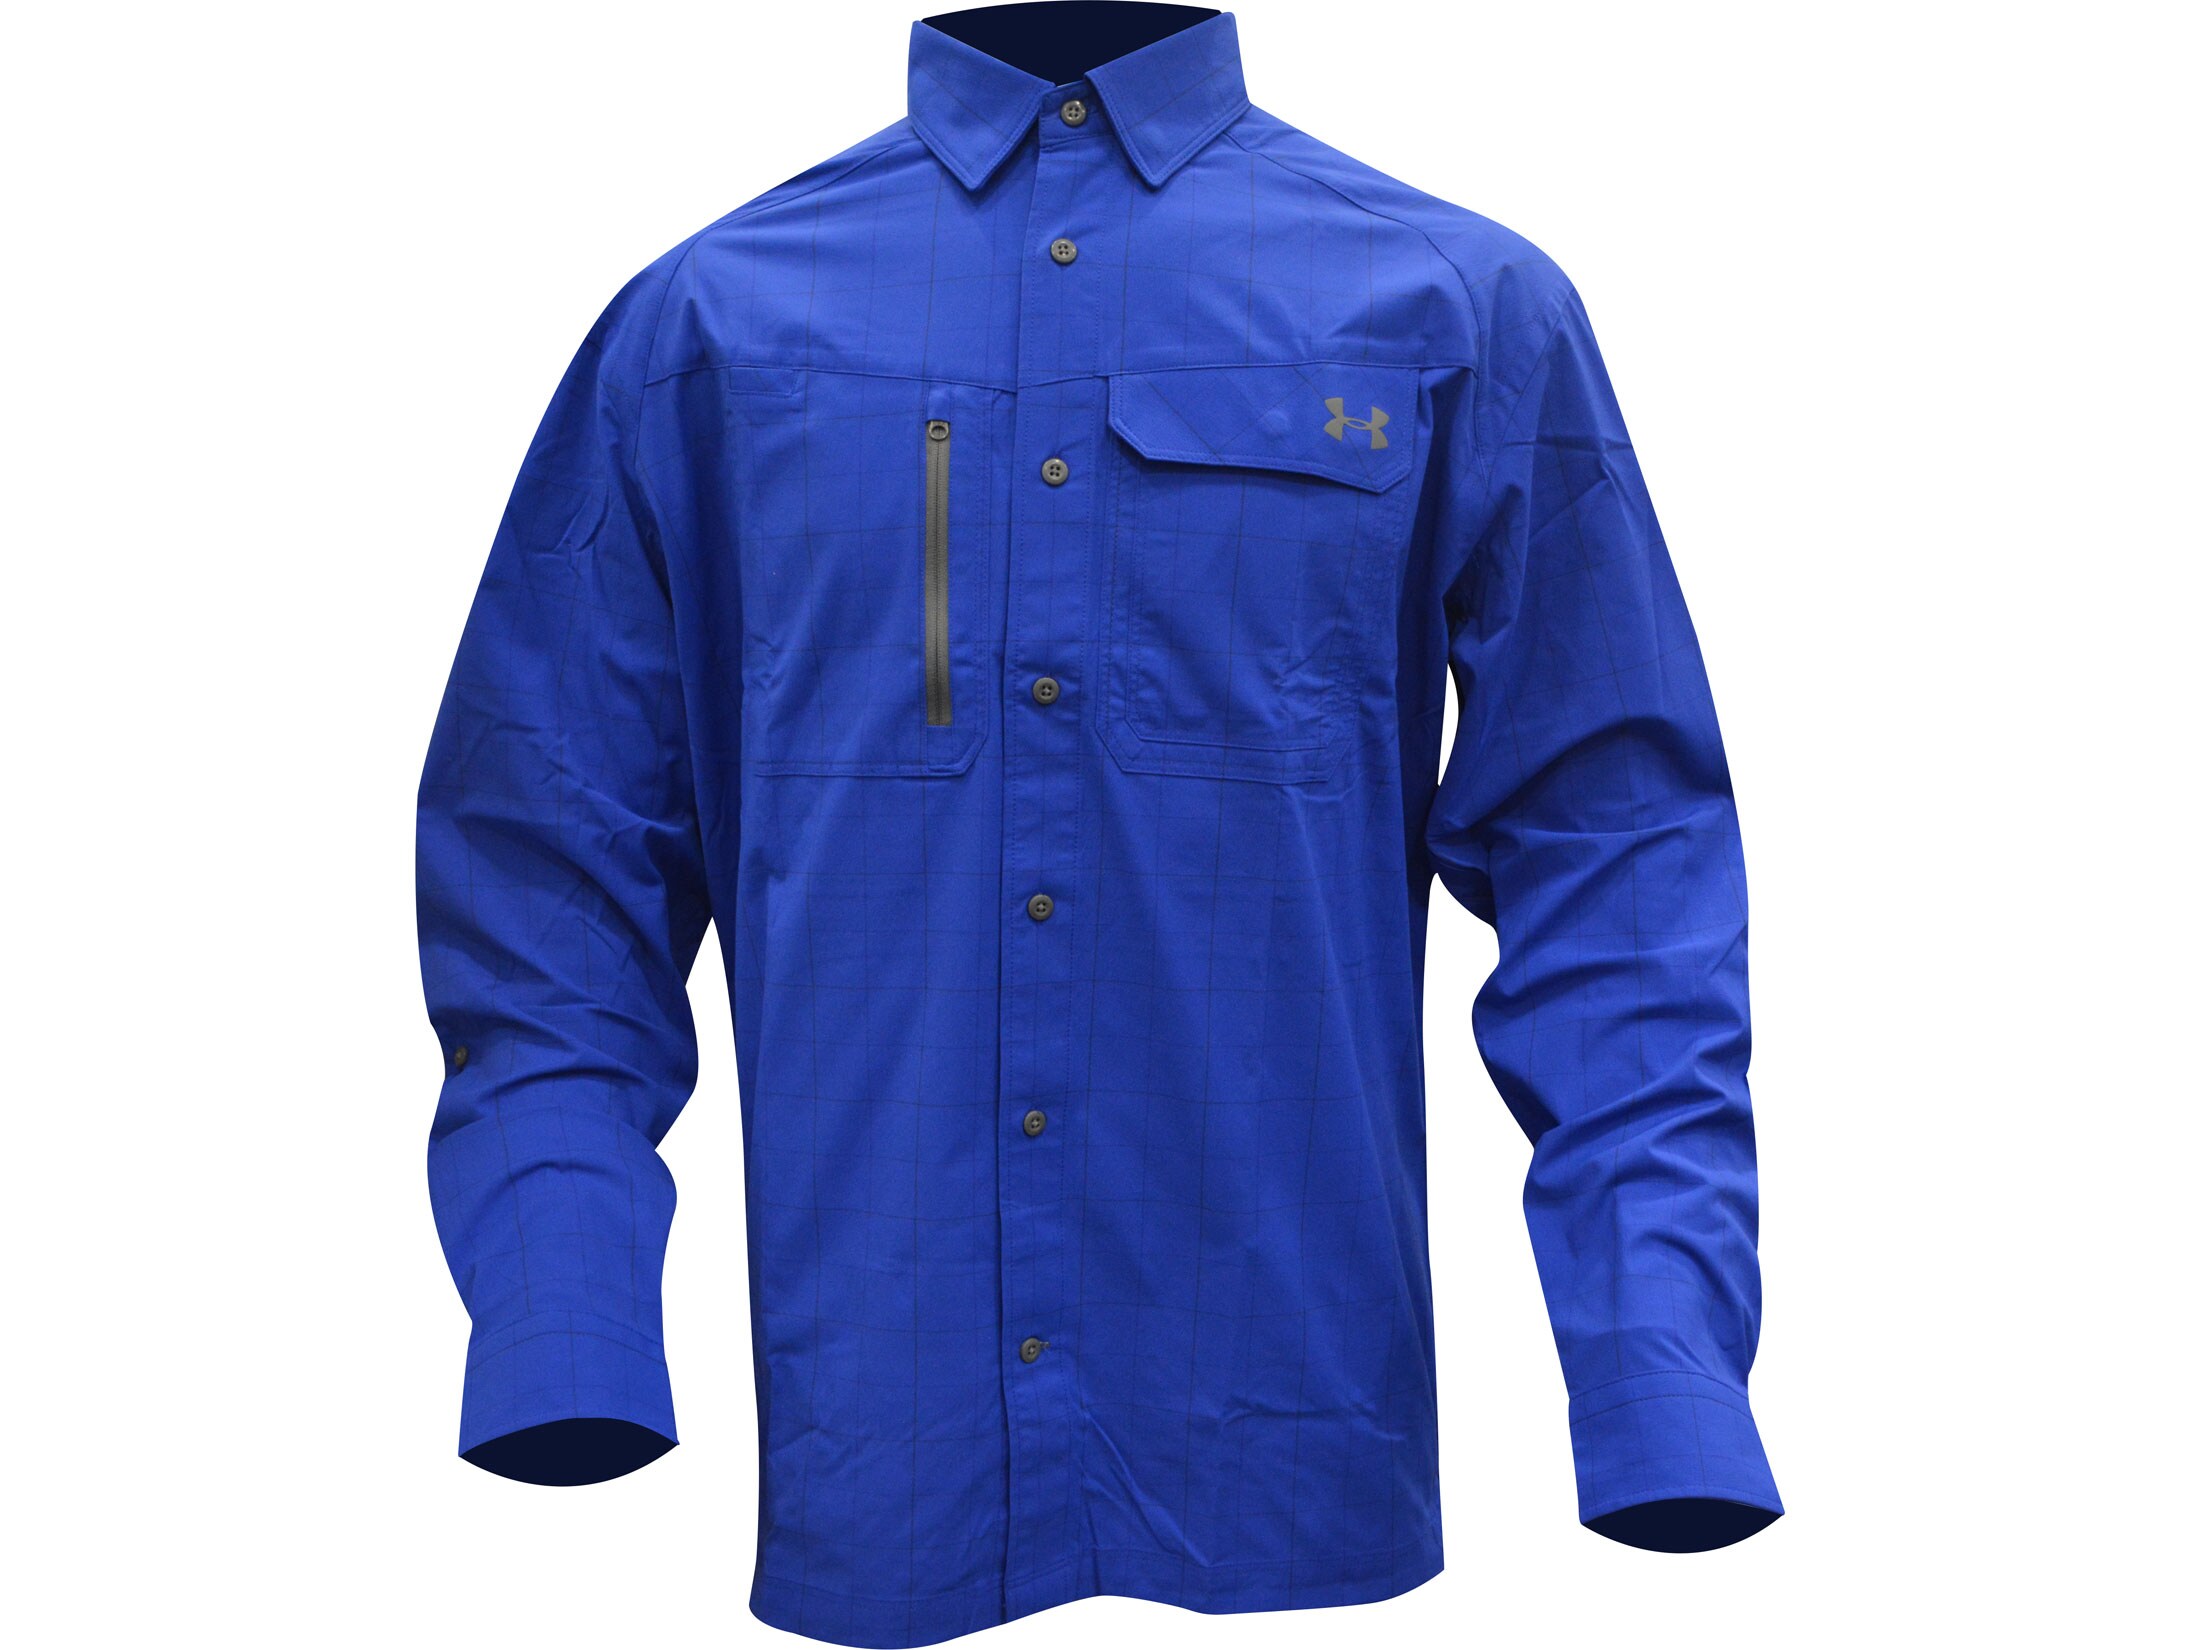 Under Armour Men's UA Fish Hunter Button-Up Shirt Long Sleeve Nylon